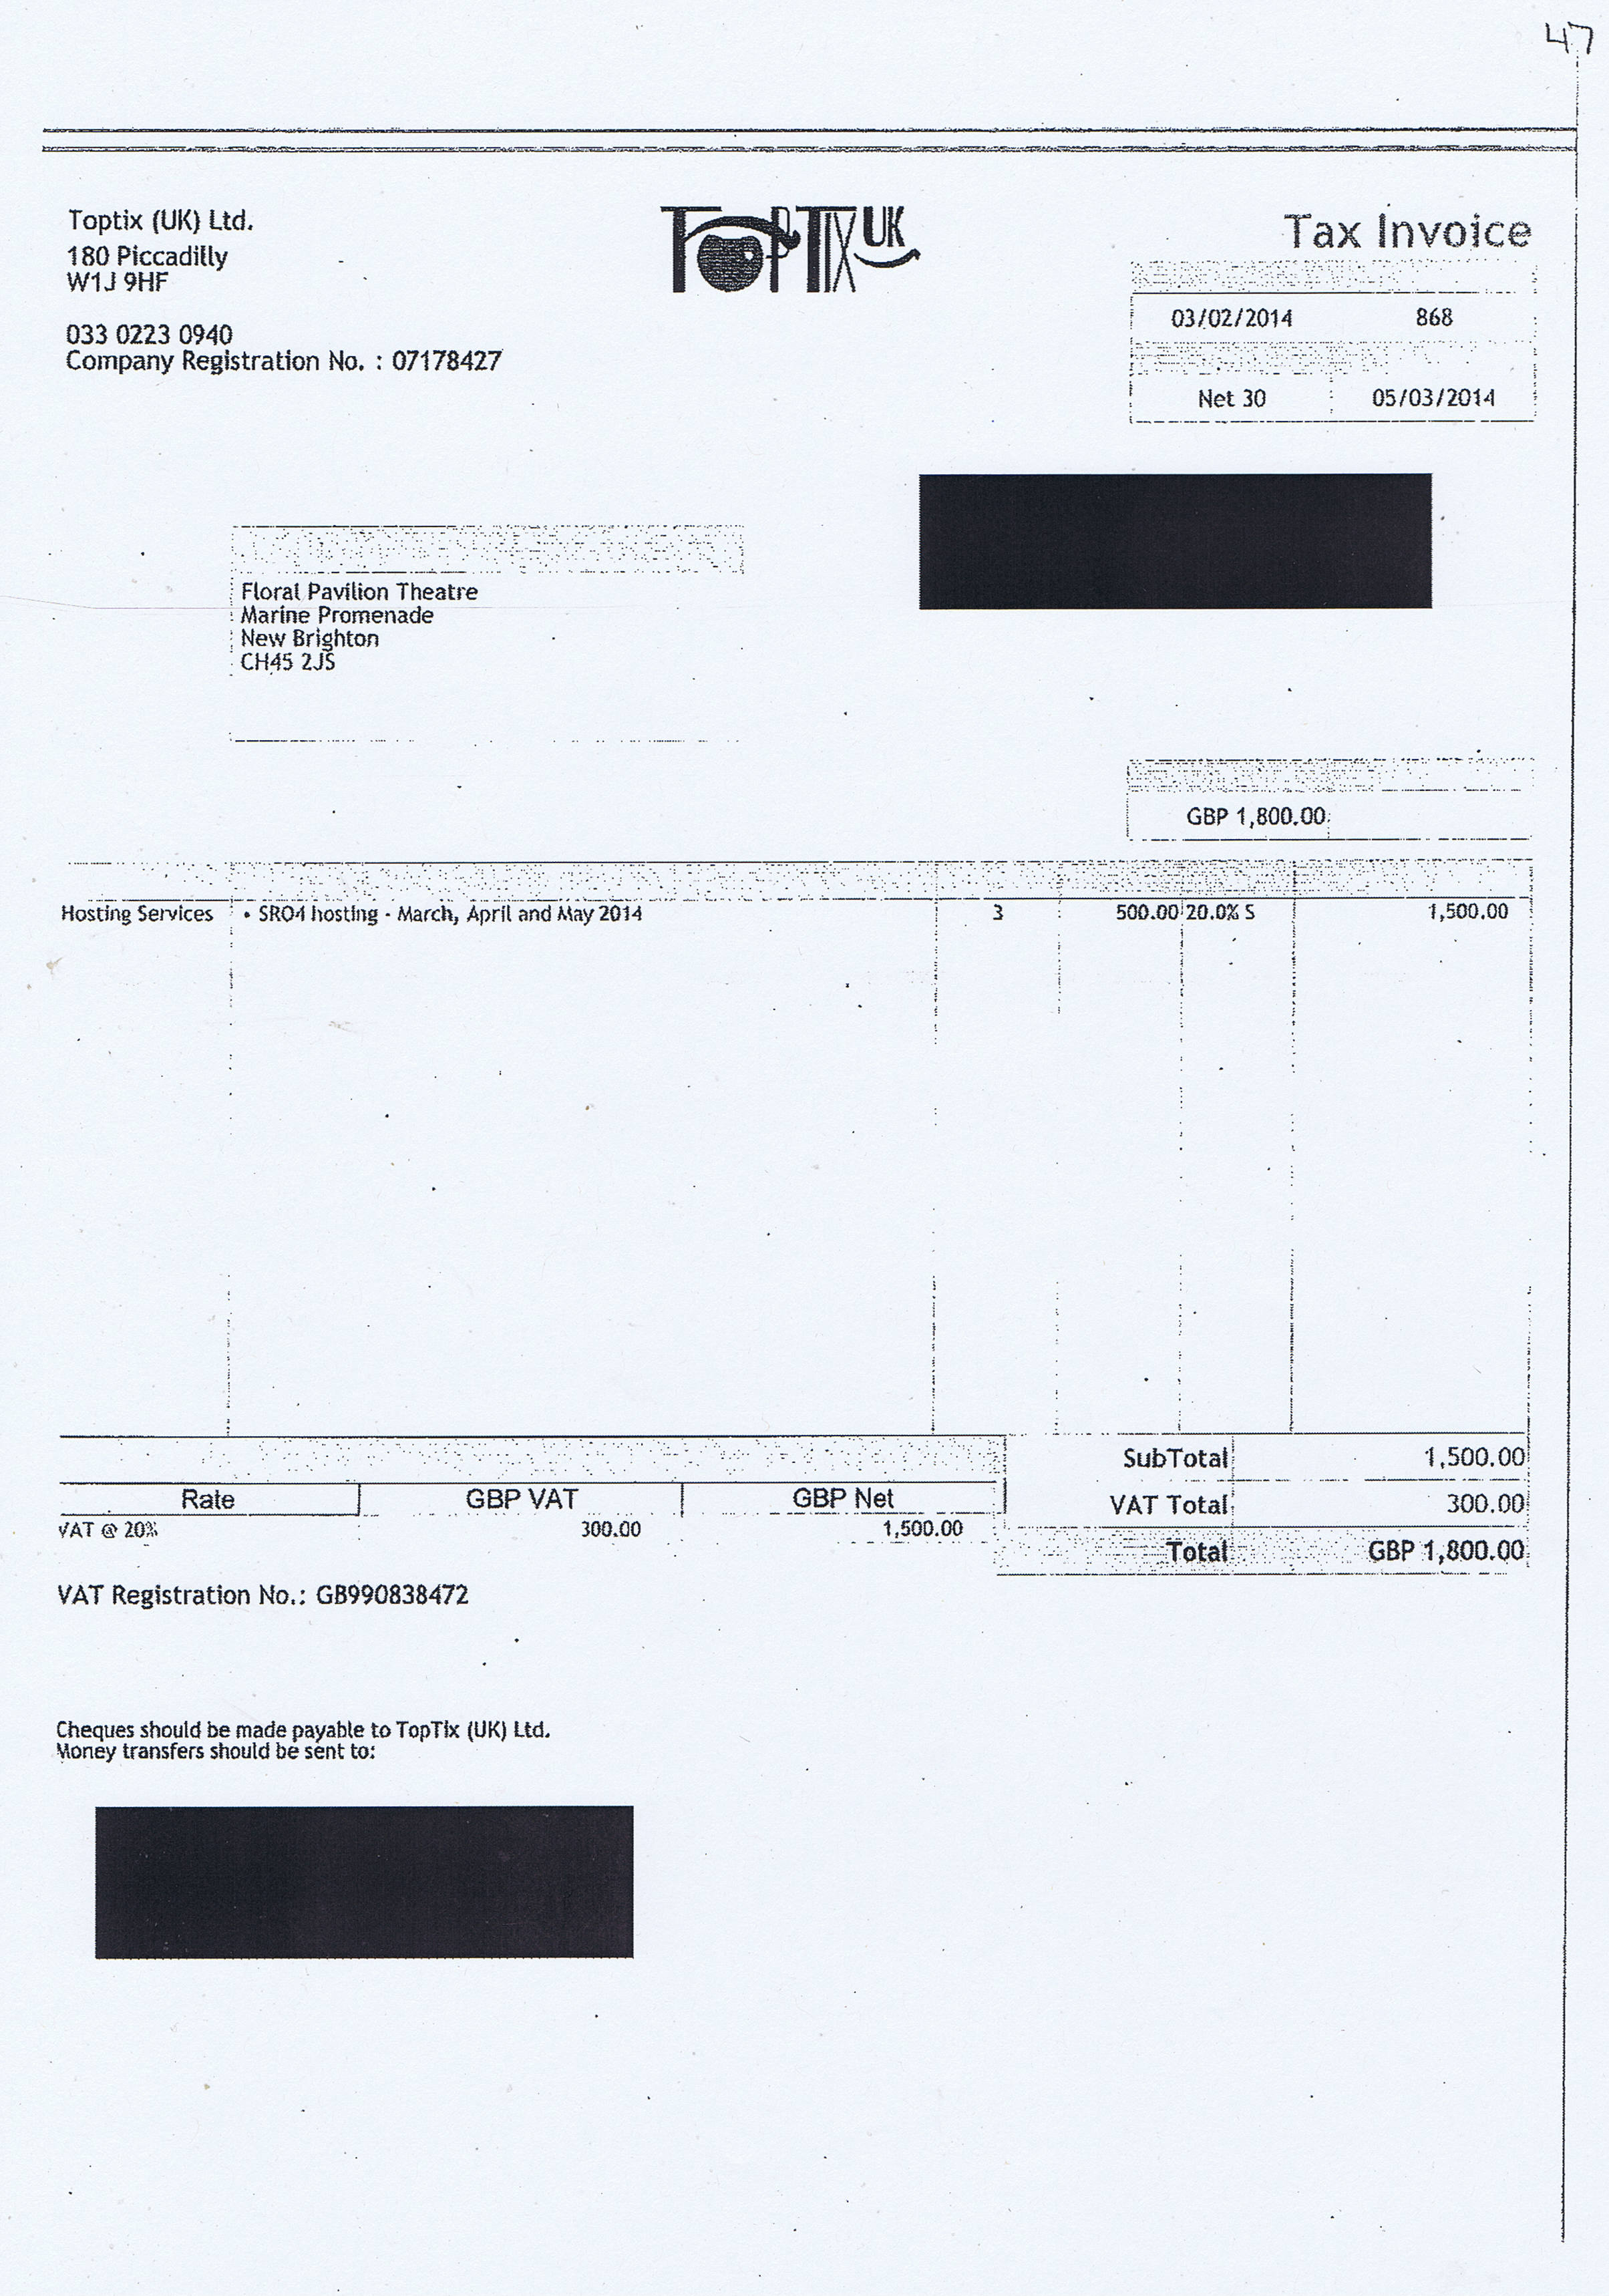 Wirral Council invoice 47 Toptix (UK) Ltd £1800